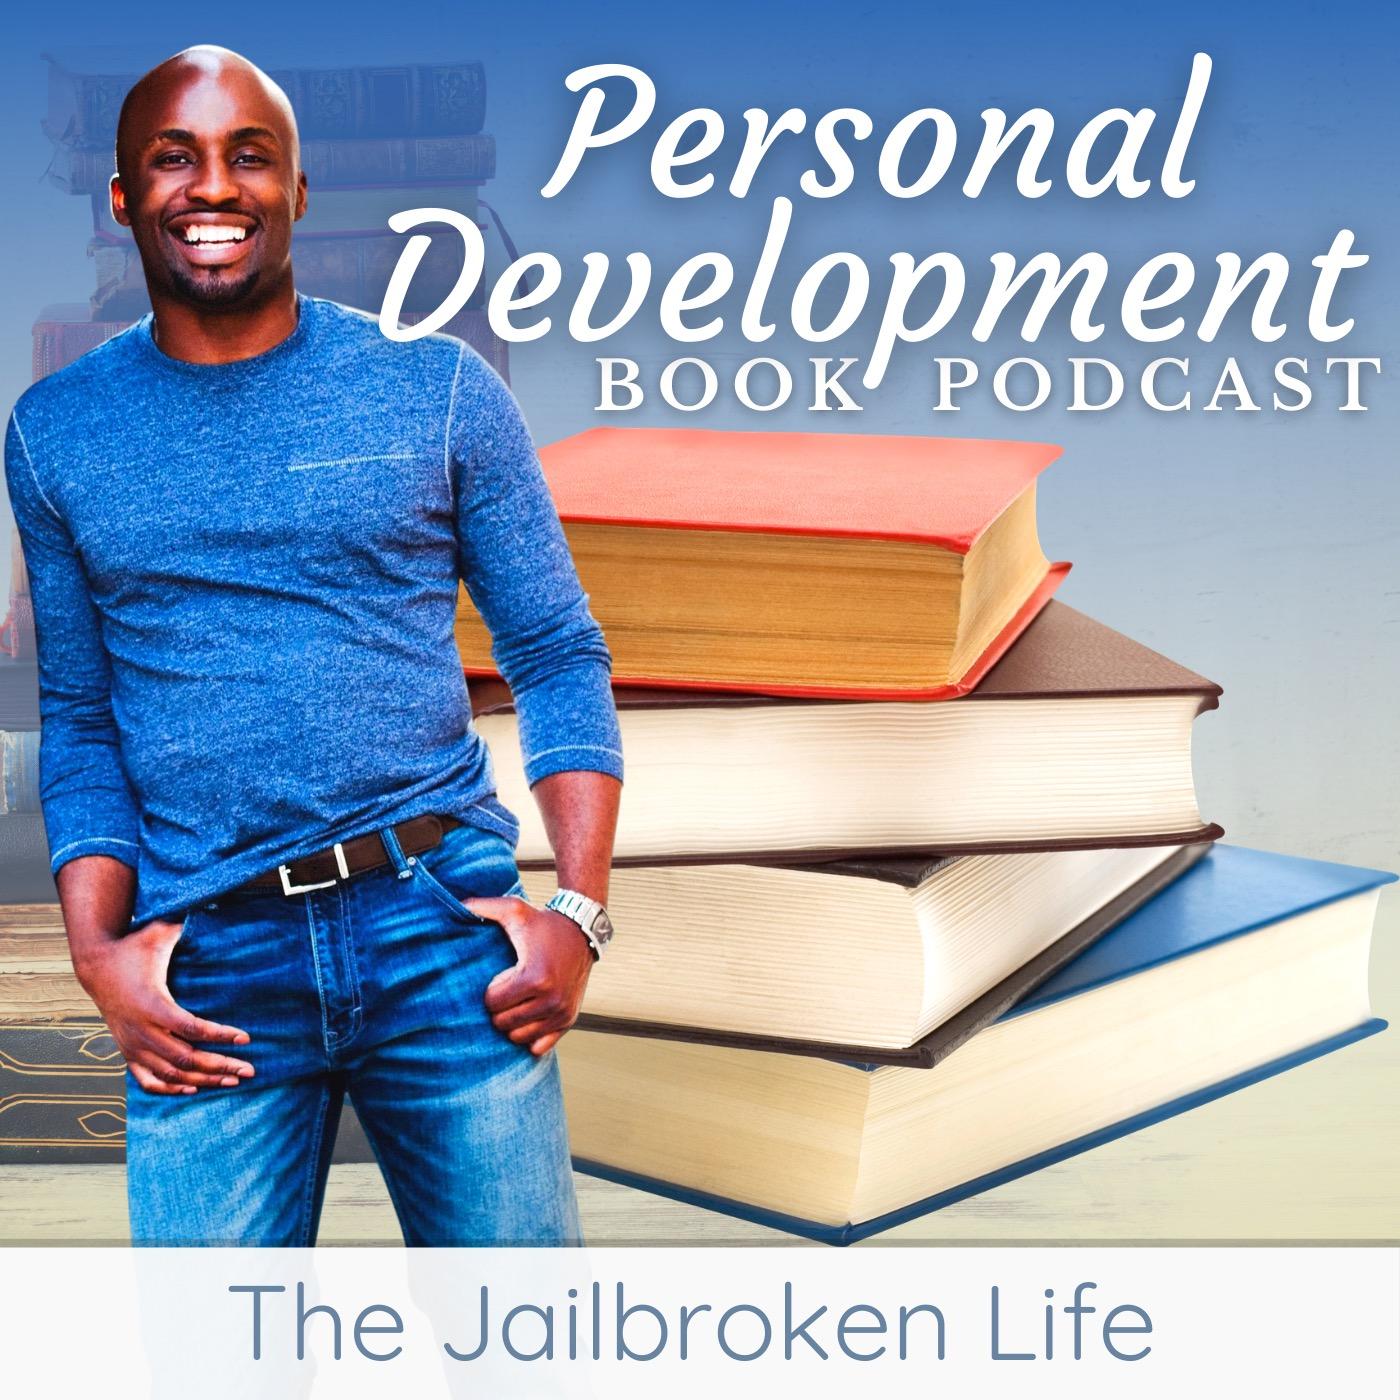 Personal Development Book Podcast